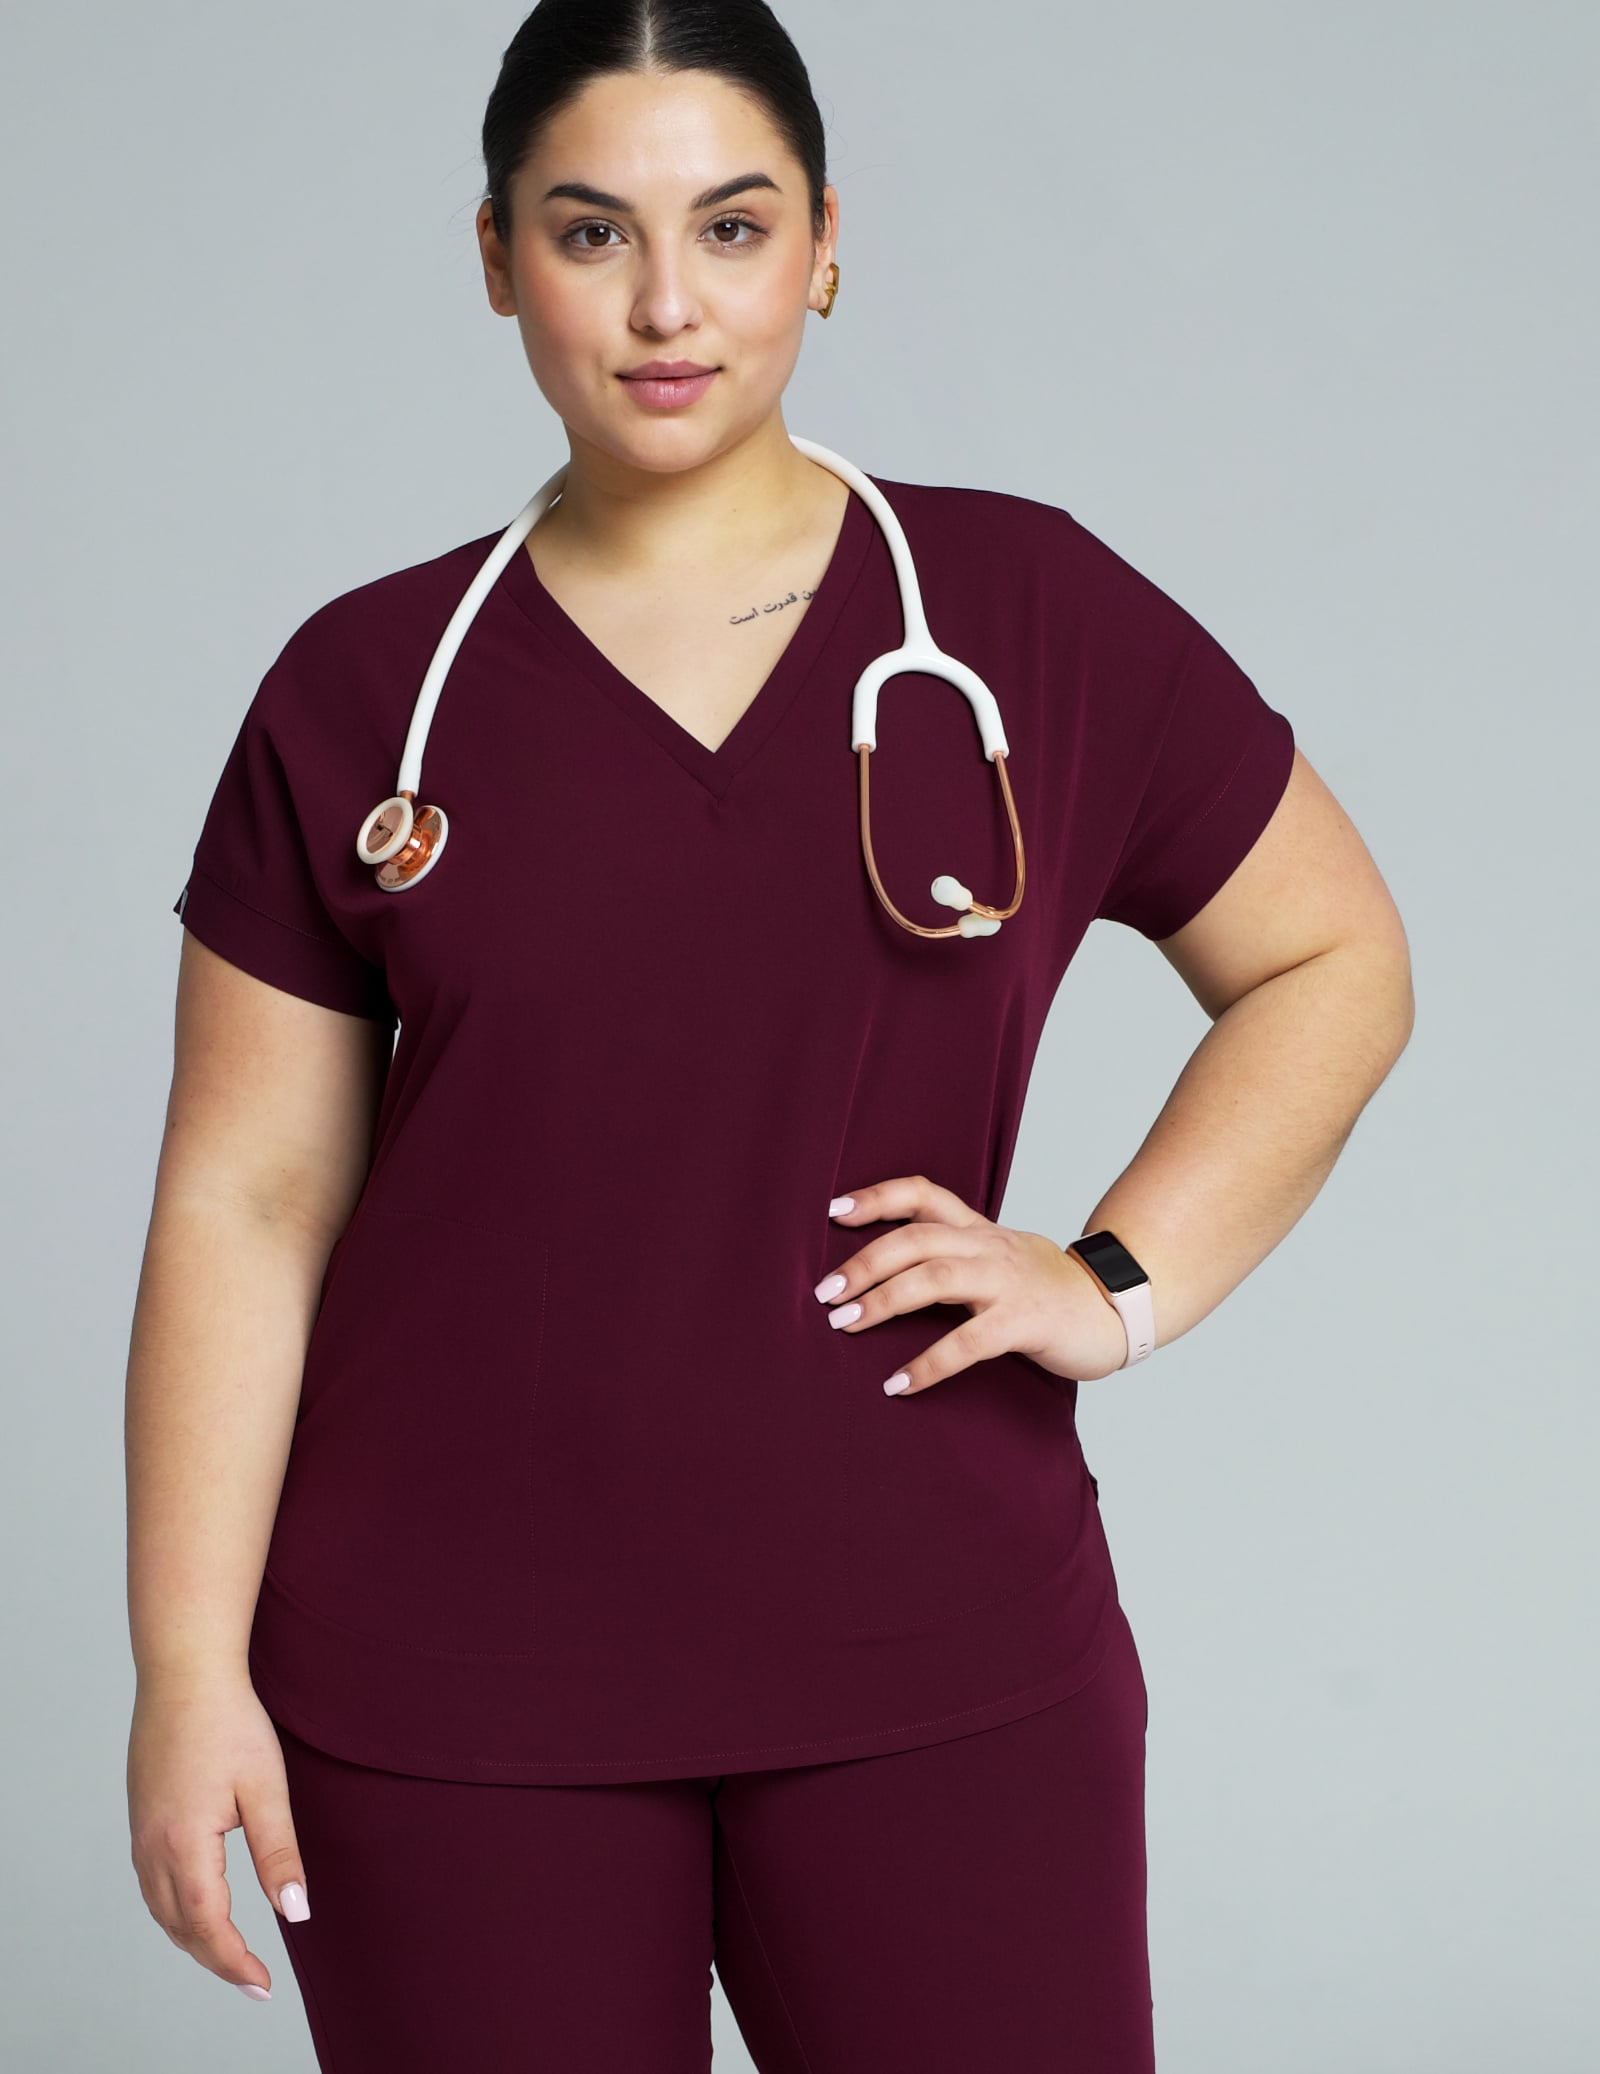 Bluza Medyczna Kendall - BURGUNDY